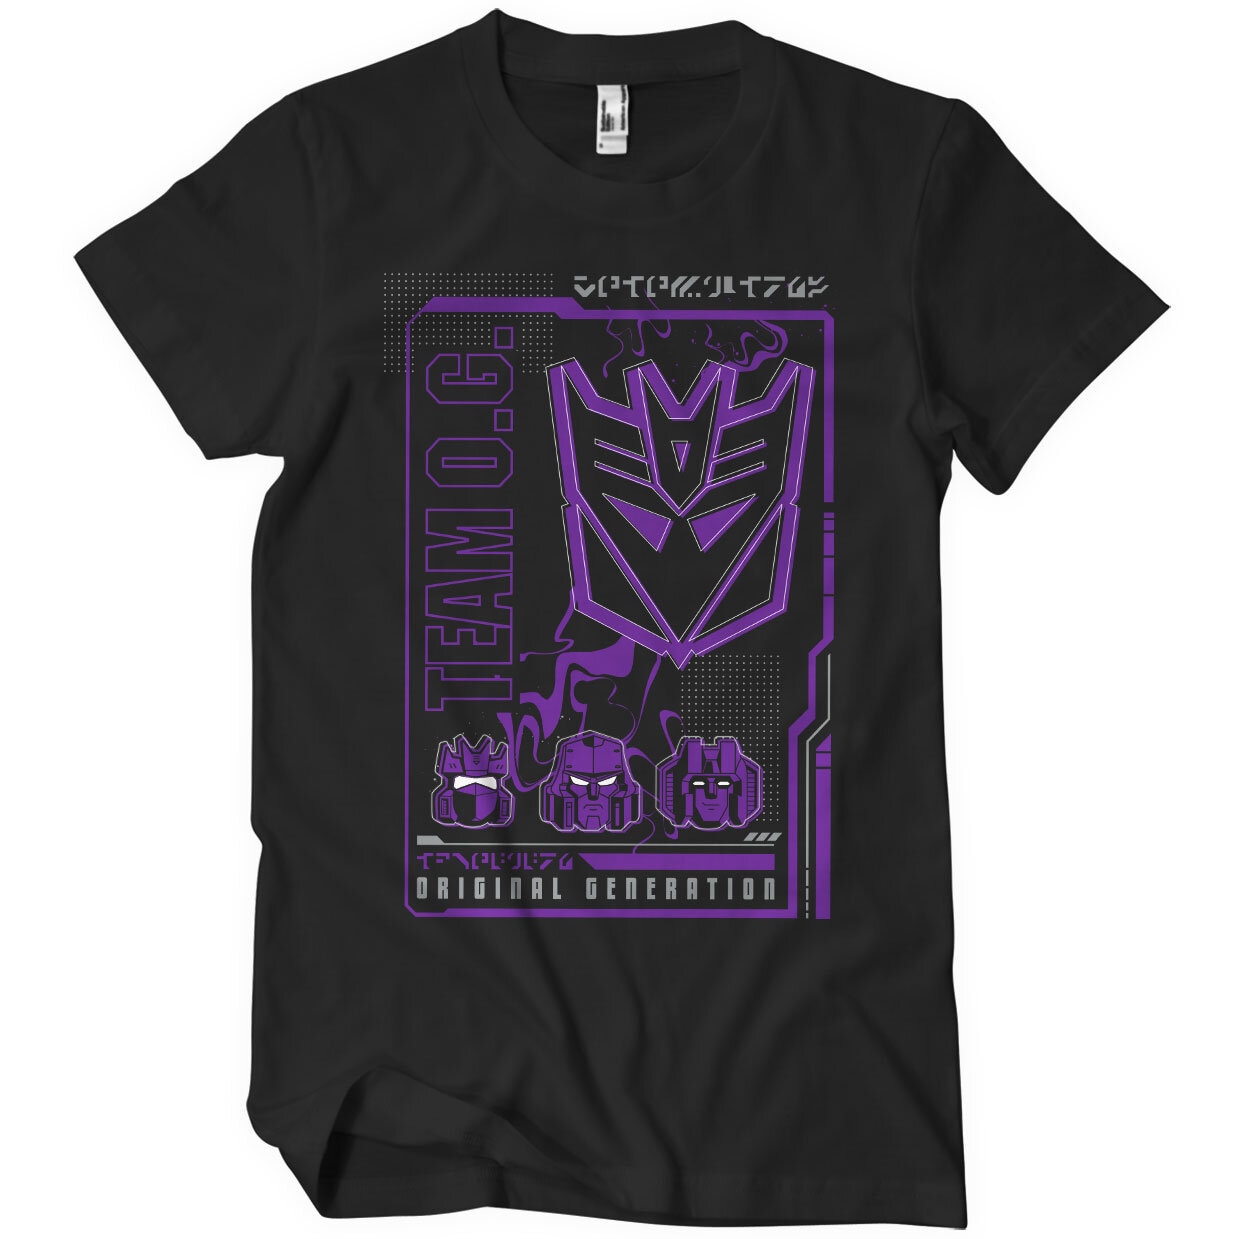 Decepticon Original Generation T-Shirt